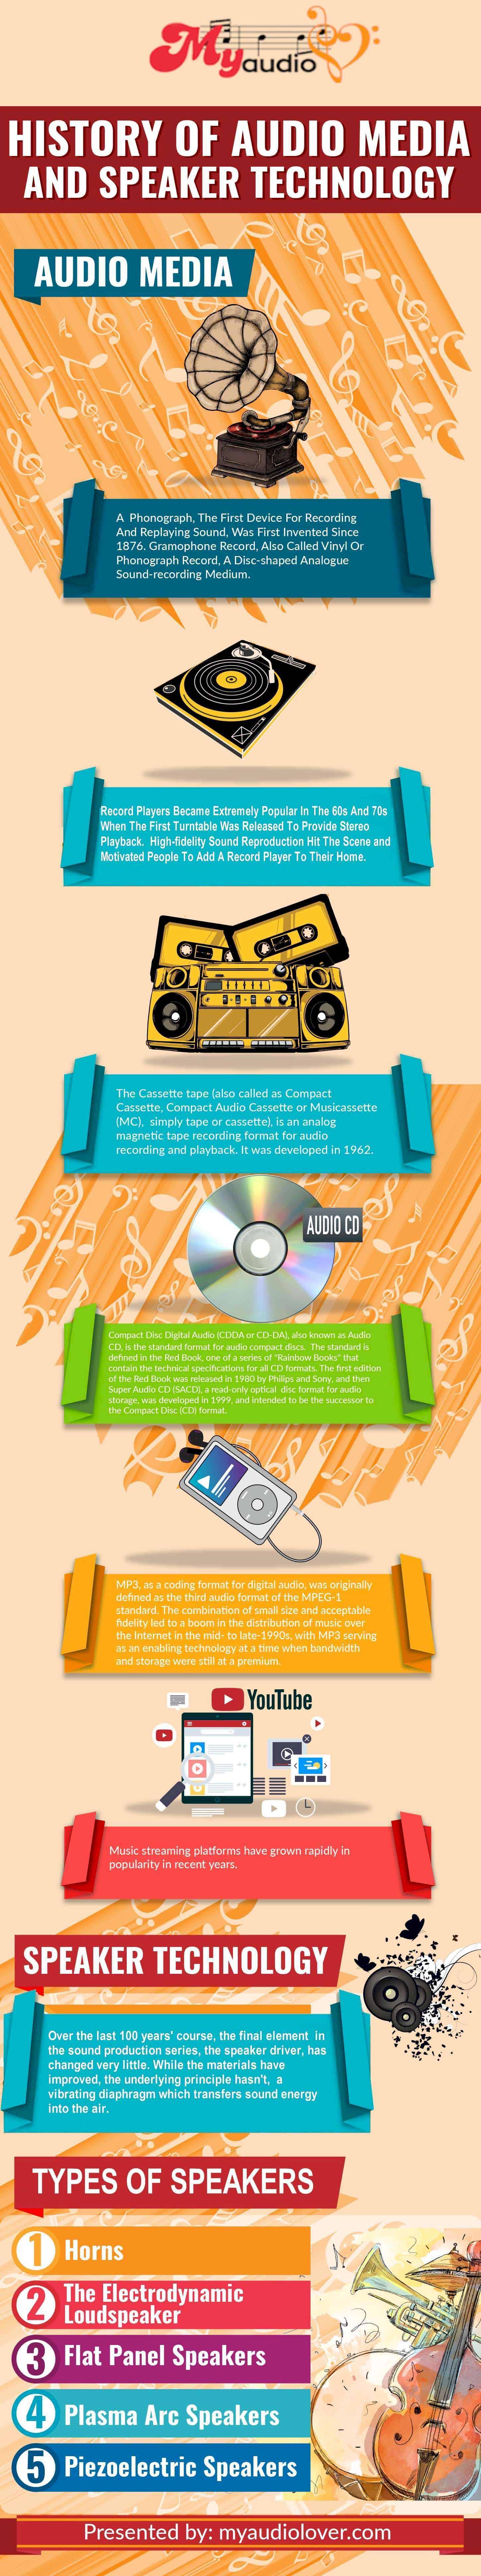 audio speasker history infographic